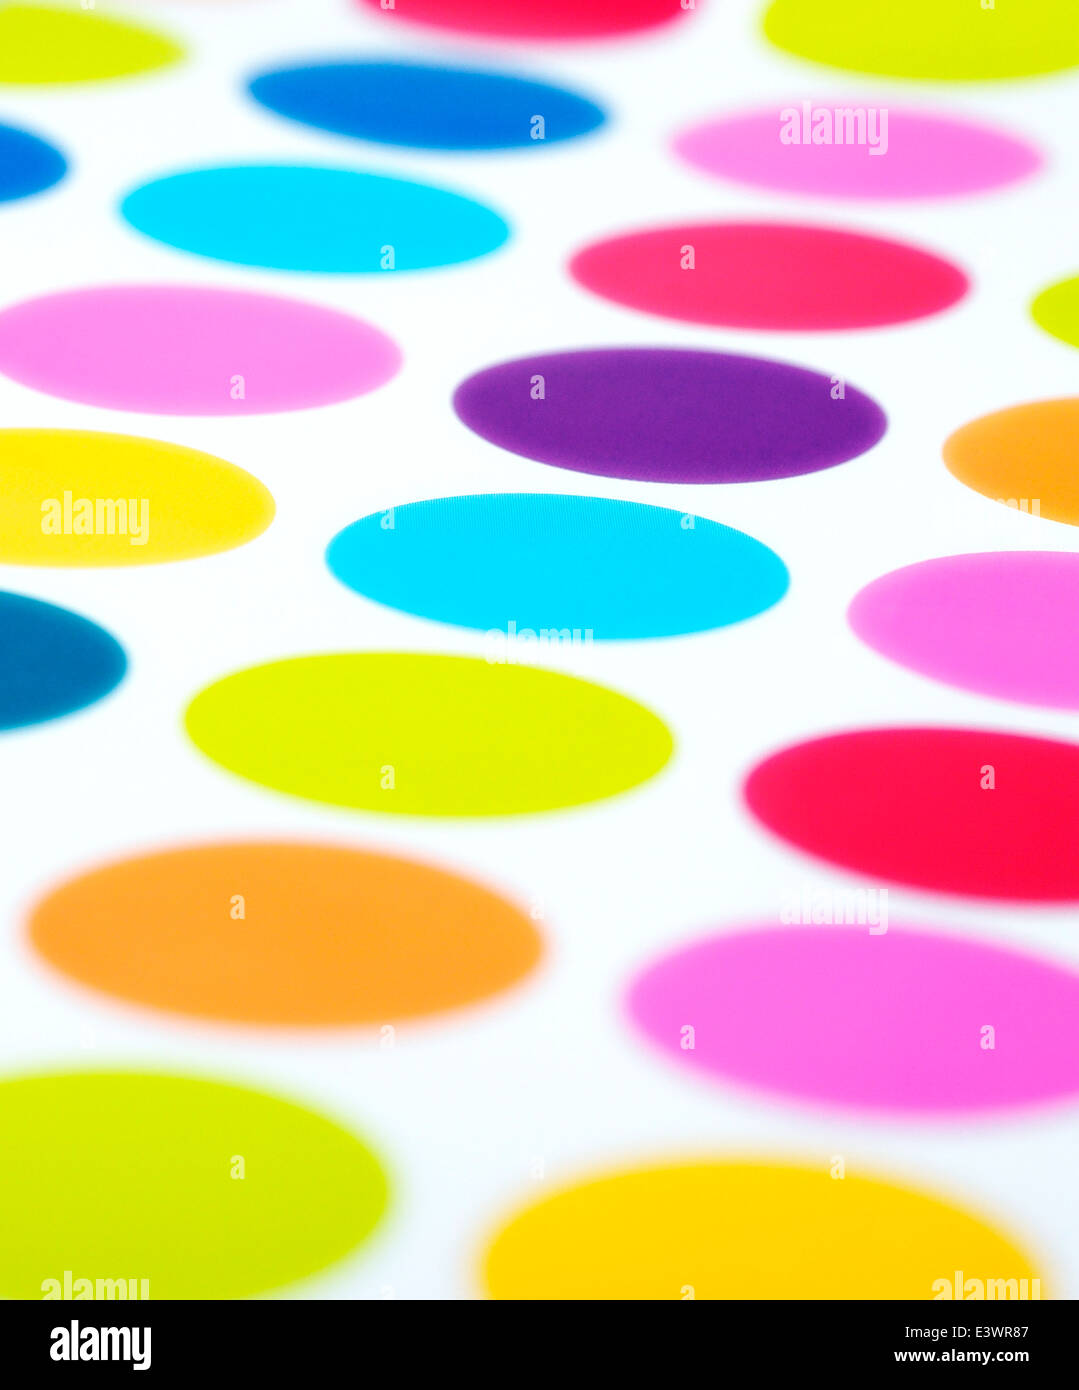 Polka dot bright colored circles Stock Photo - Alamy